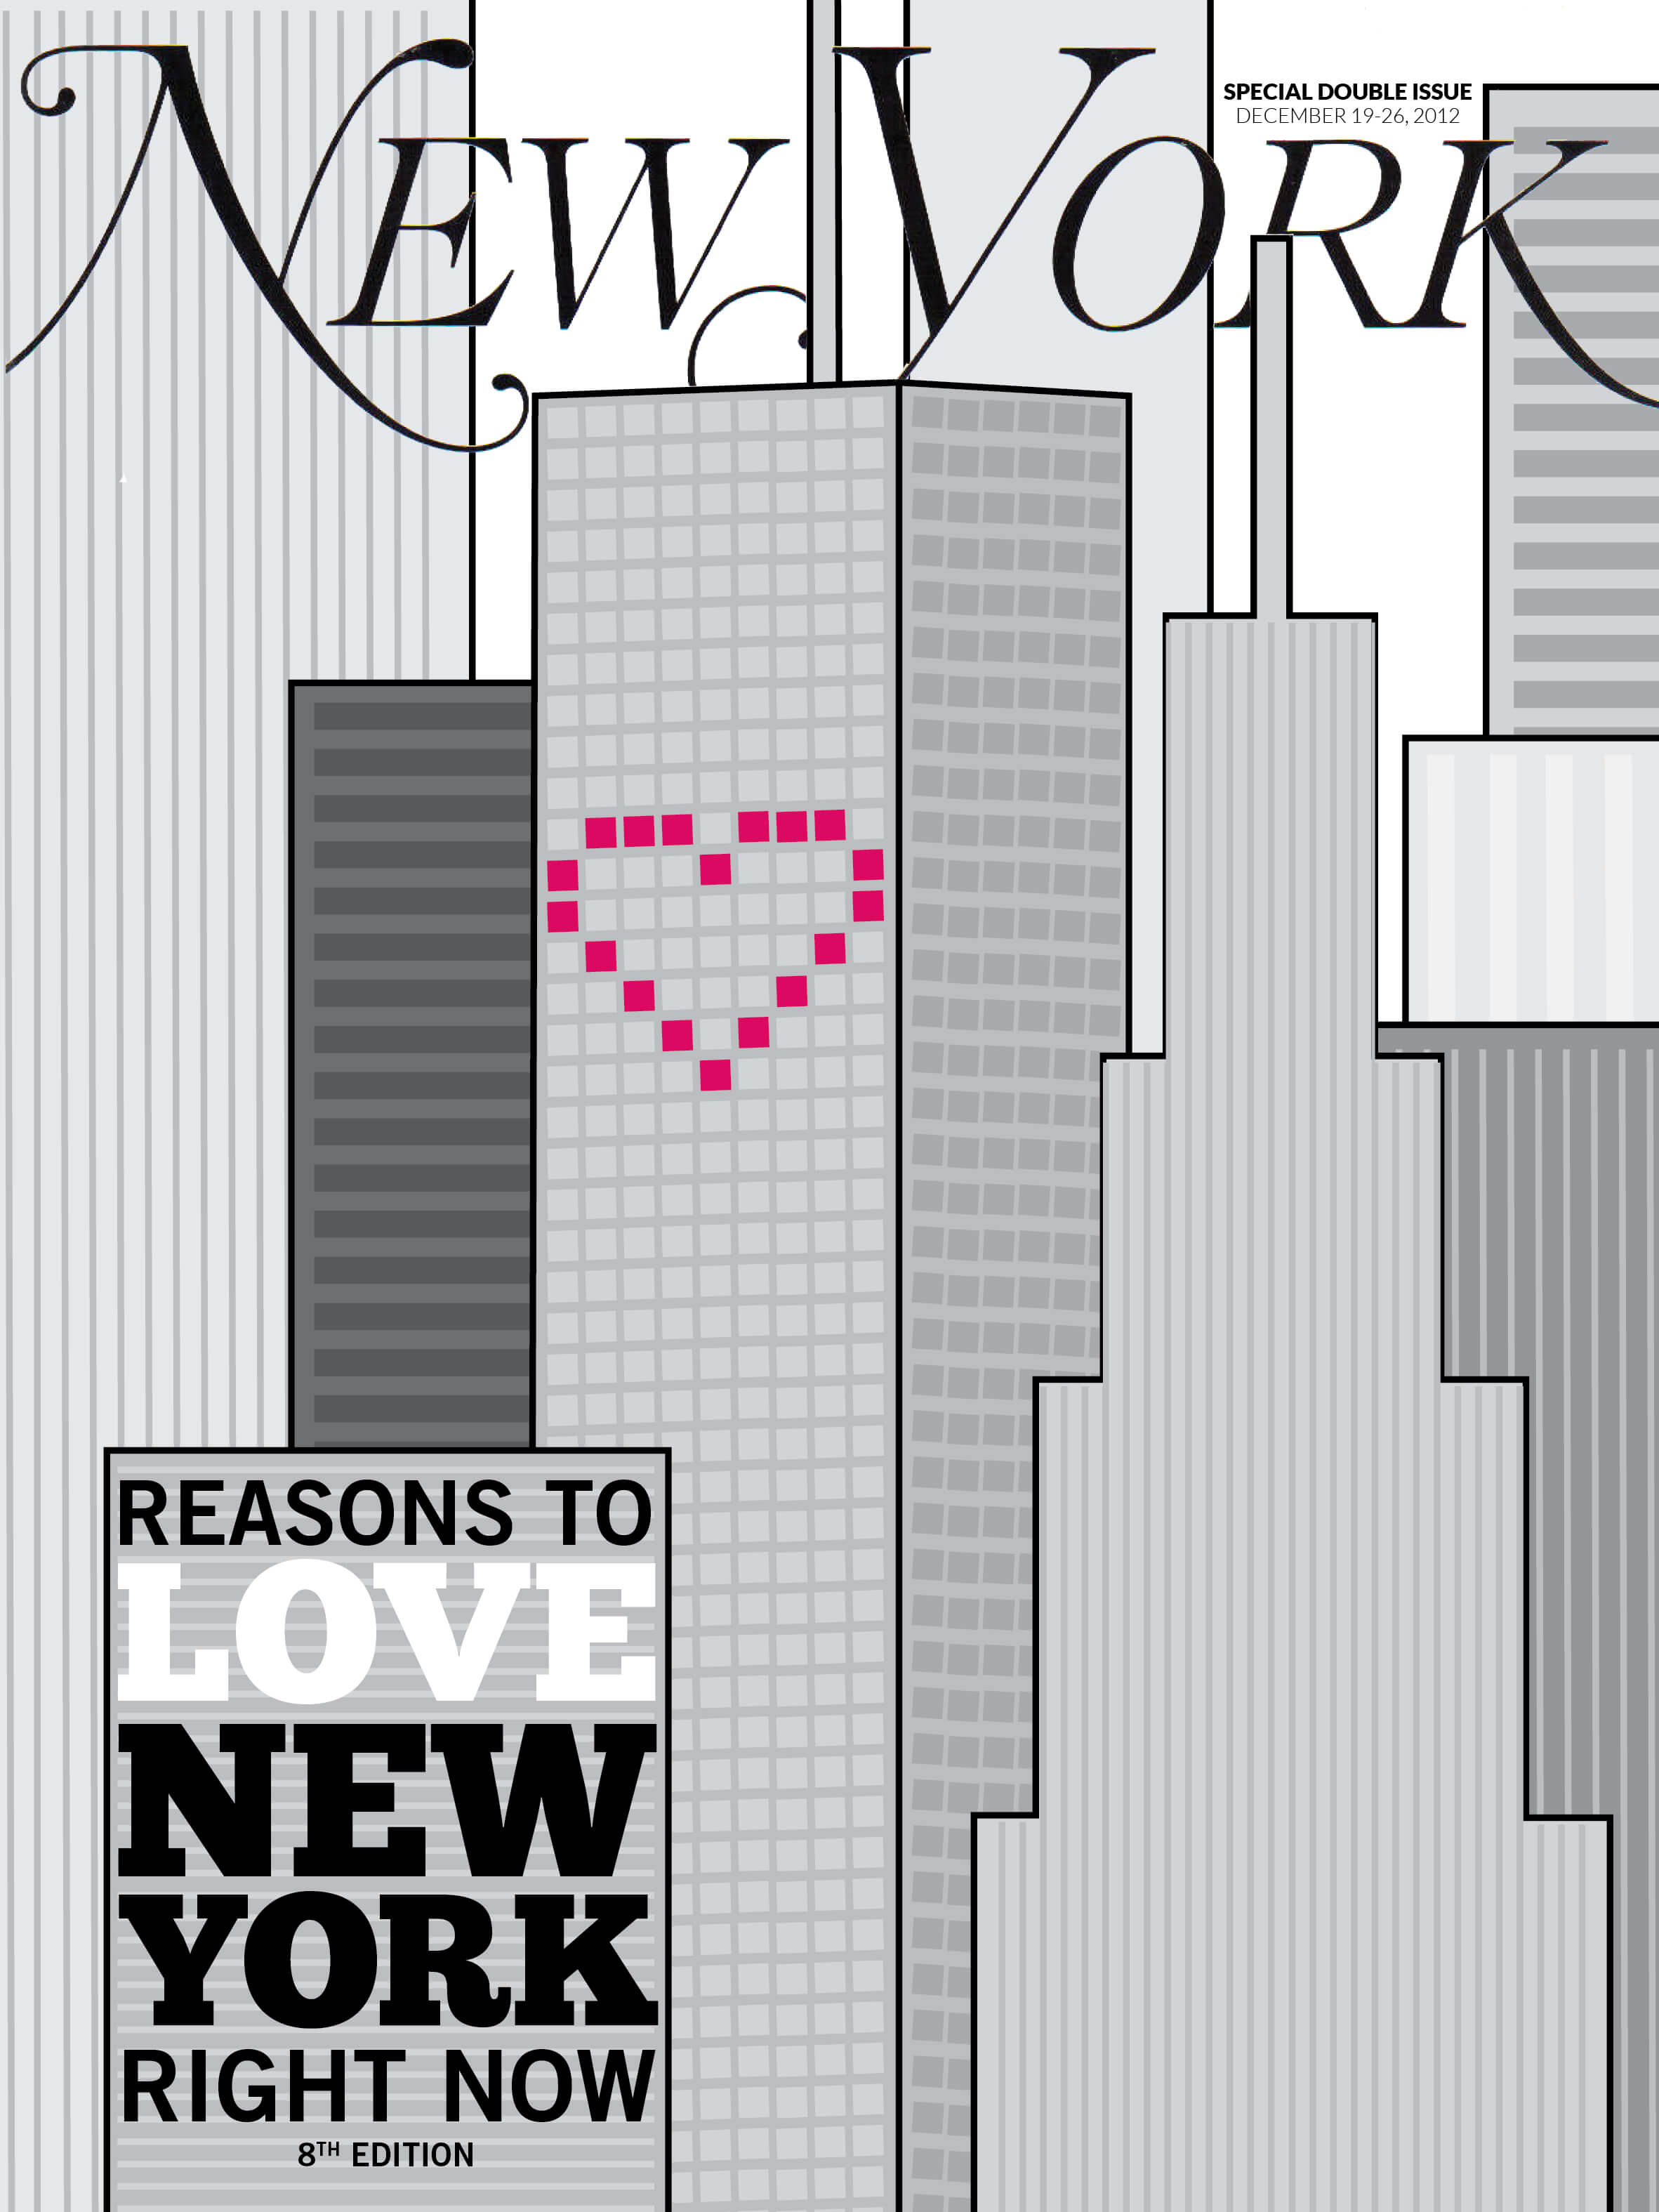 Reasons to Love New York by Megan Hillman